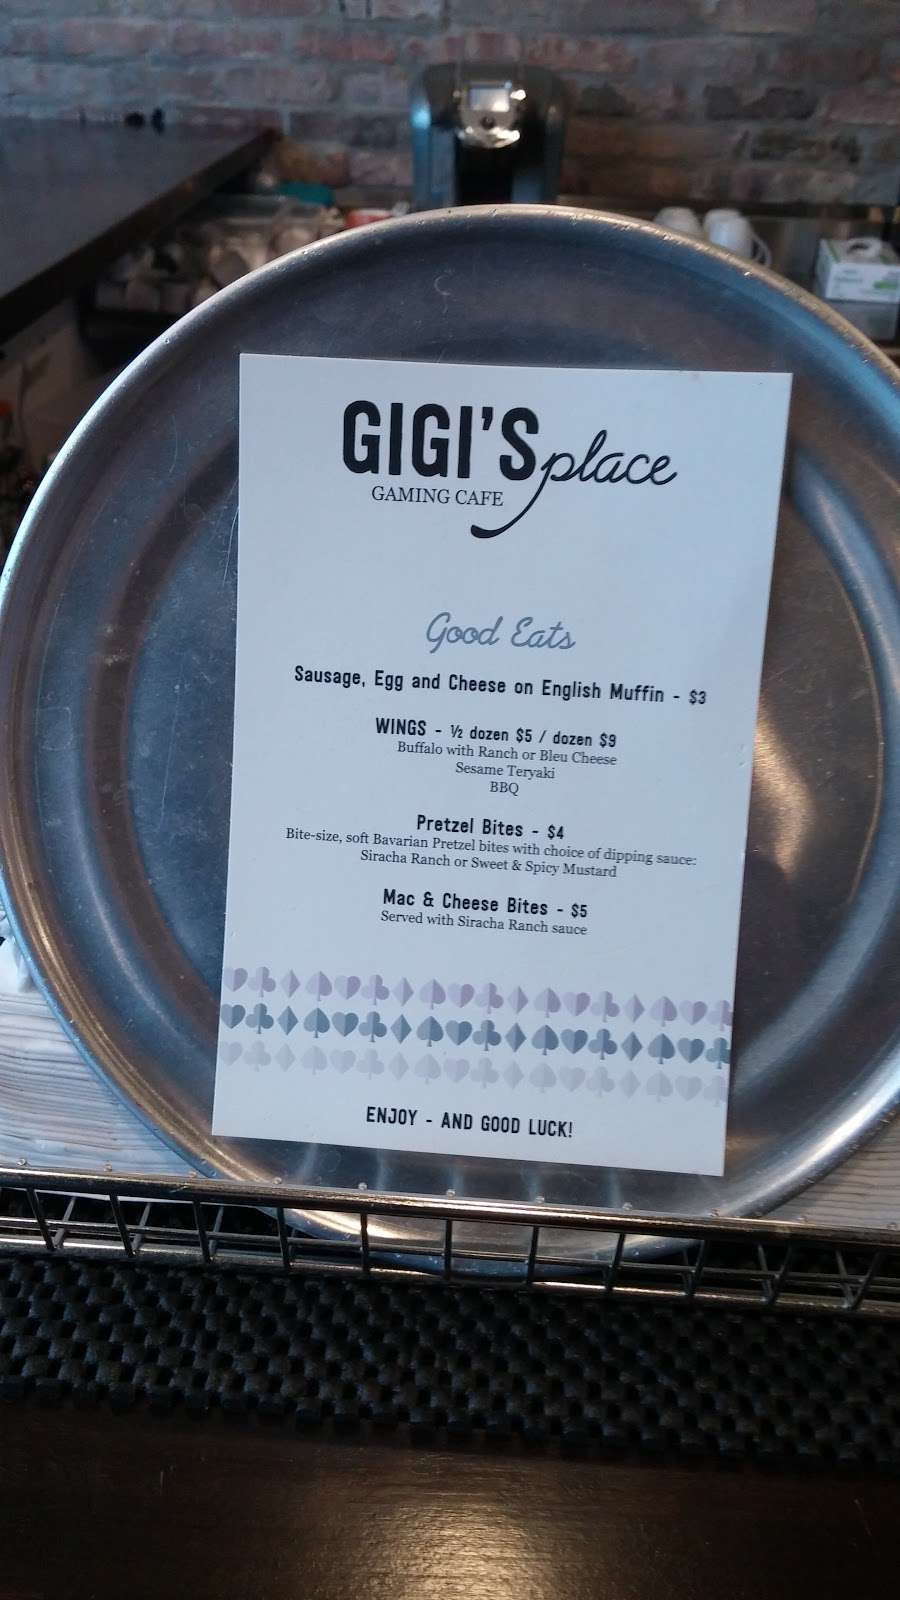 GiGis Cafe | 5600 Kenosha St B, Richmond, IL 60071 | Phone: (815) 862-1166